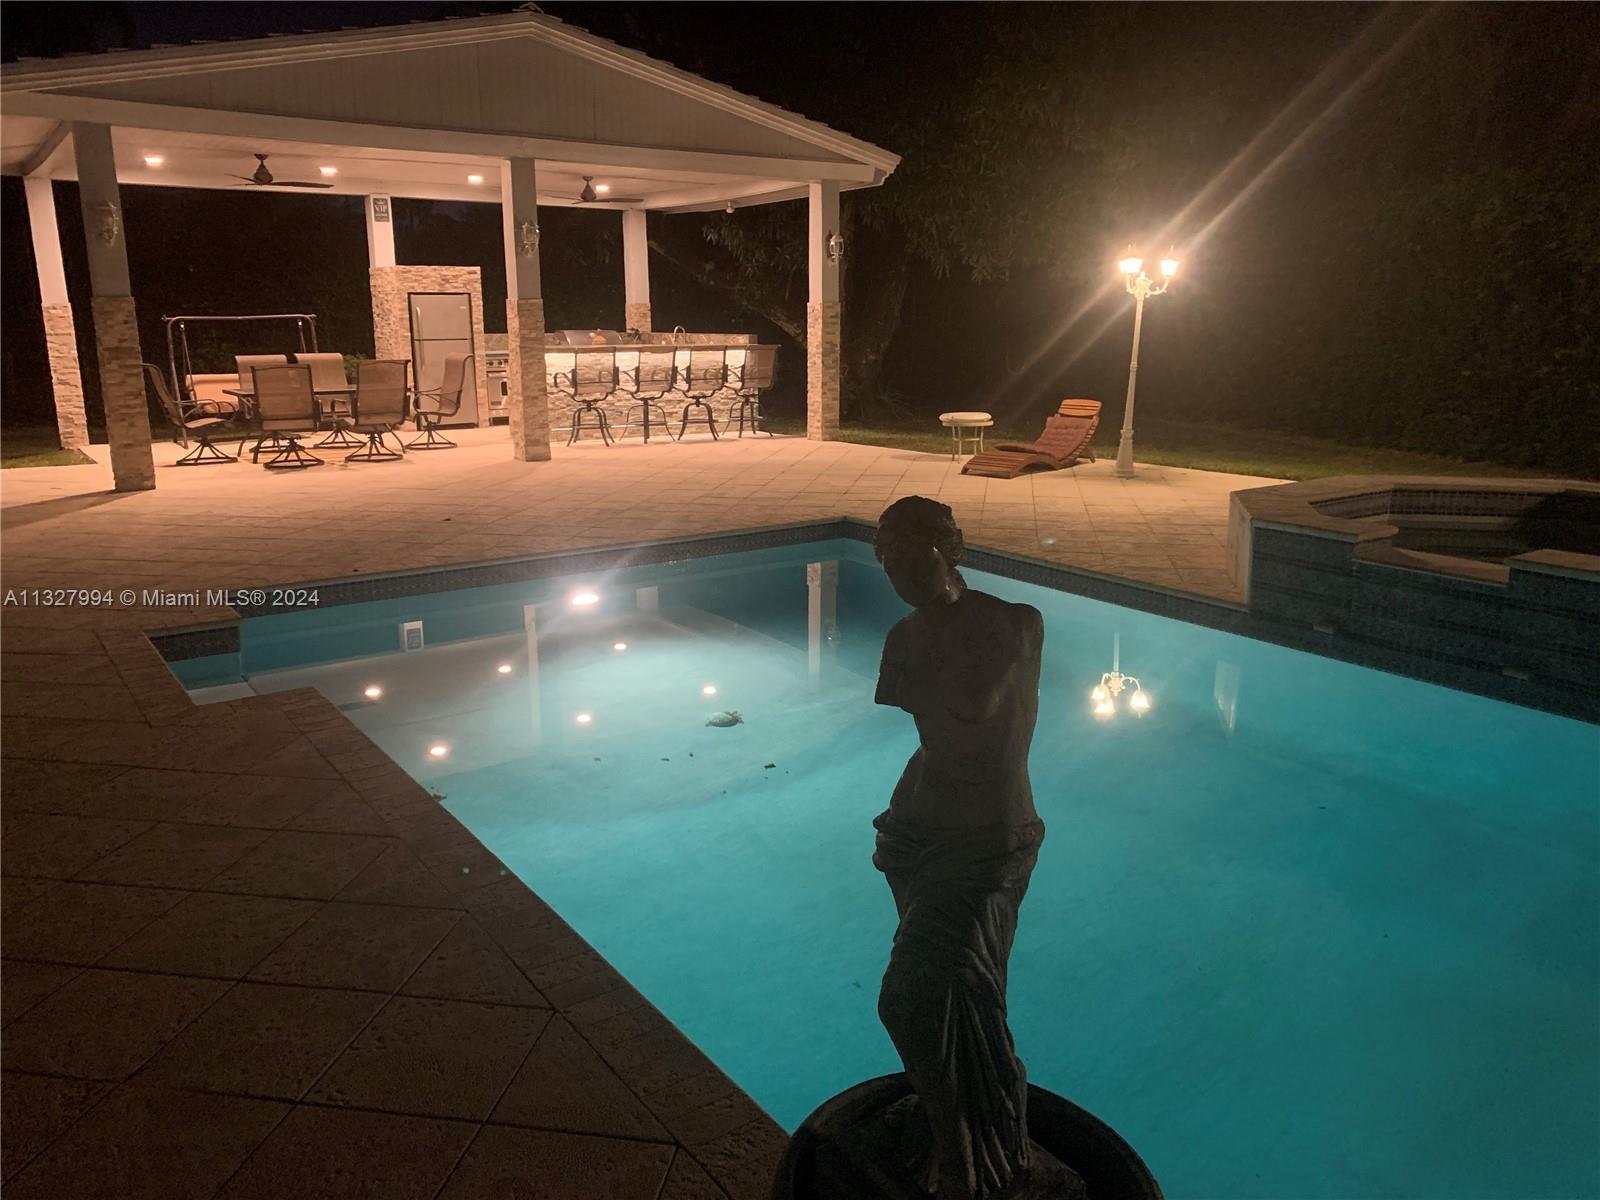 Pool Night View